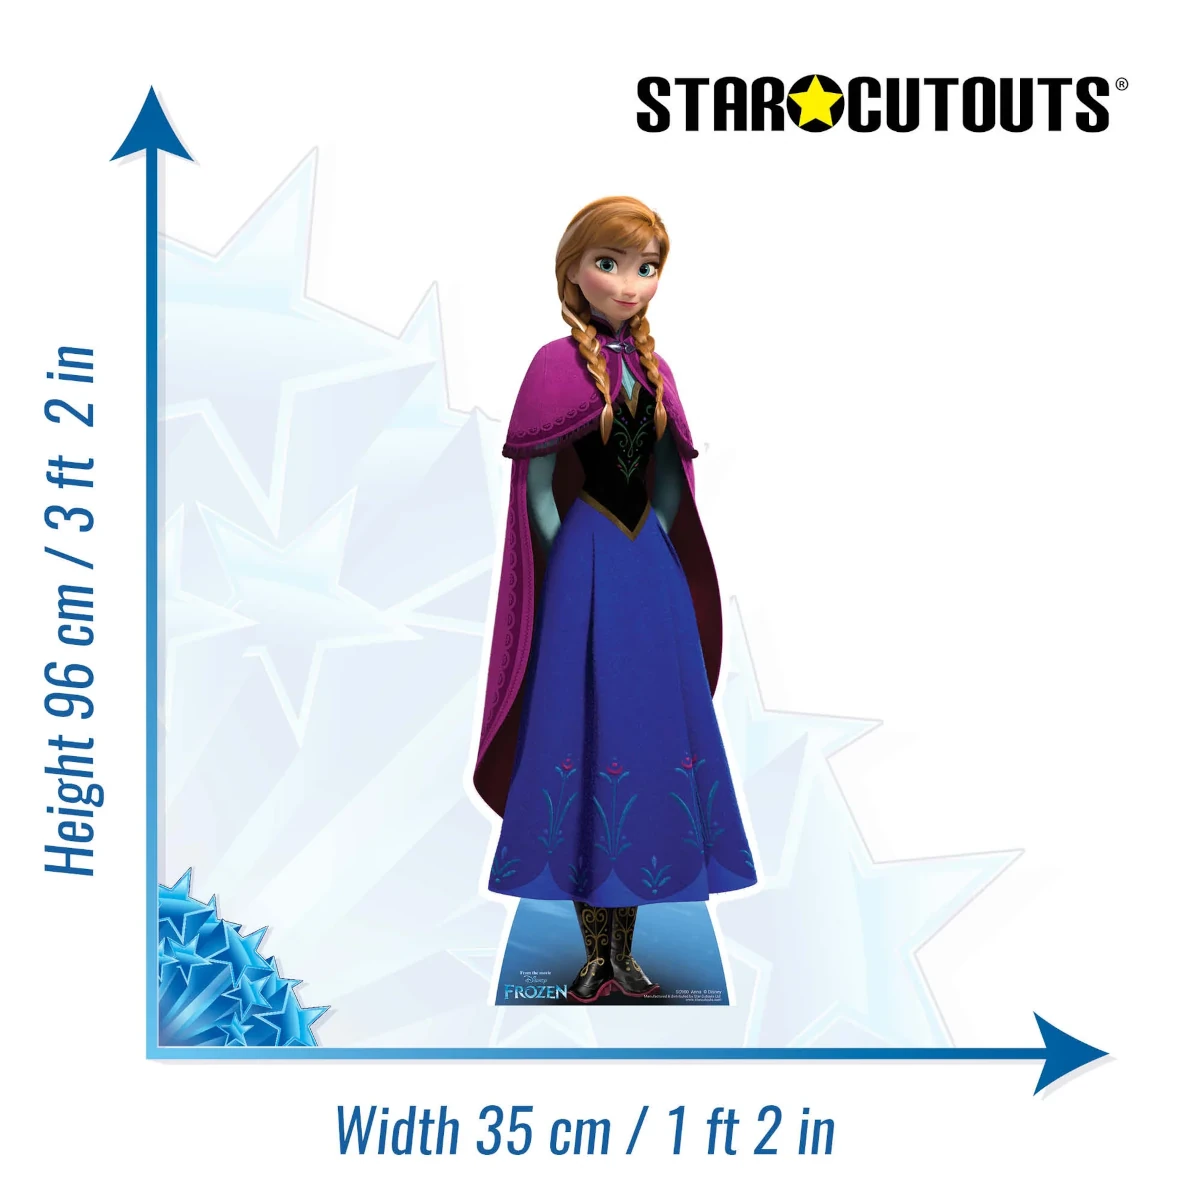 SC900 Anna (Disney Frozen) Official Mini Cardboard Cutout Standee Size